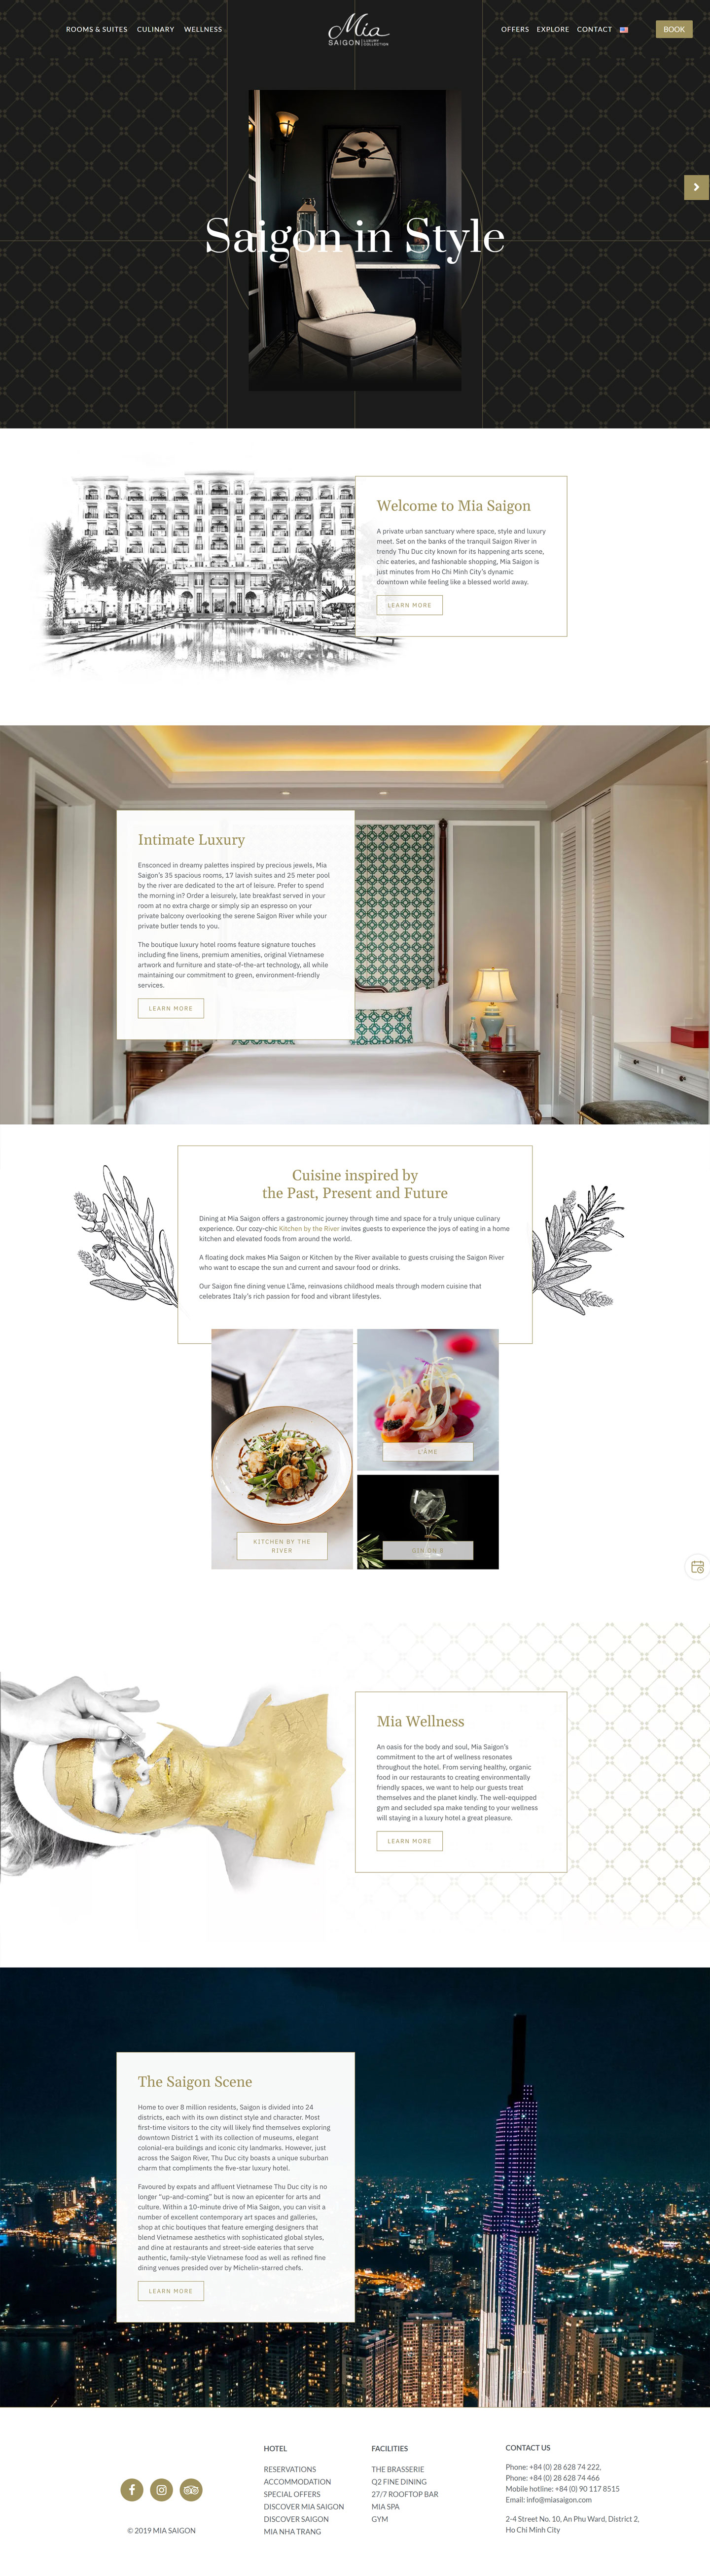 Mia Saigon hotel website design homepage